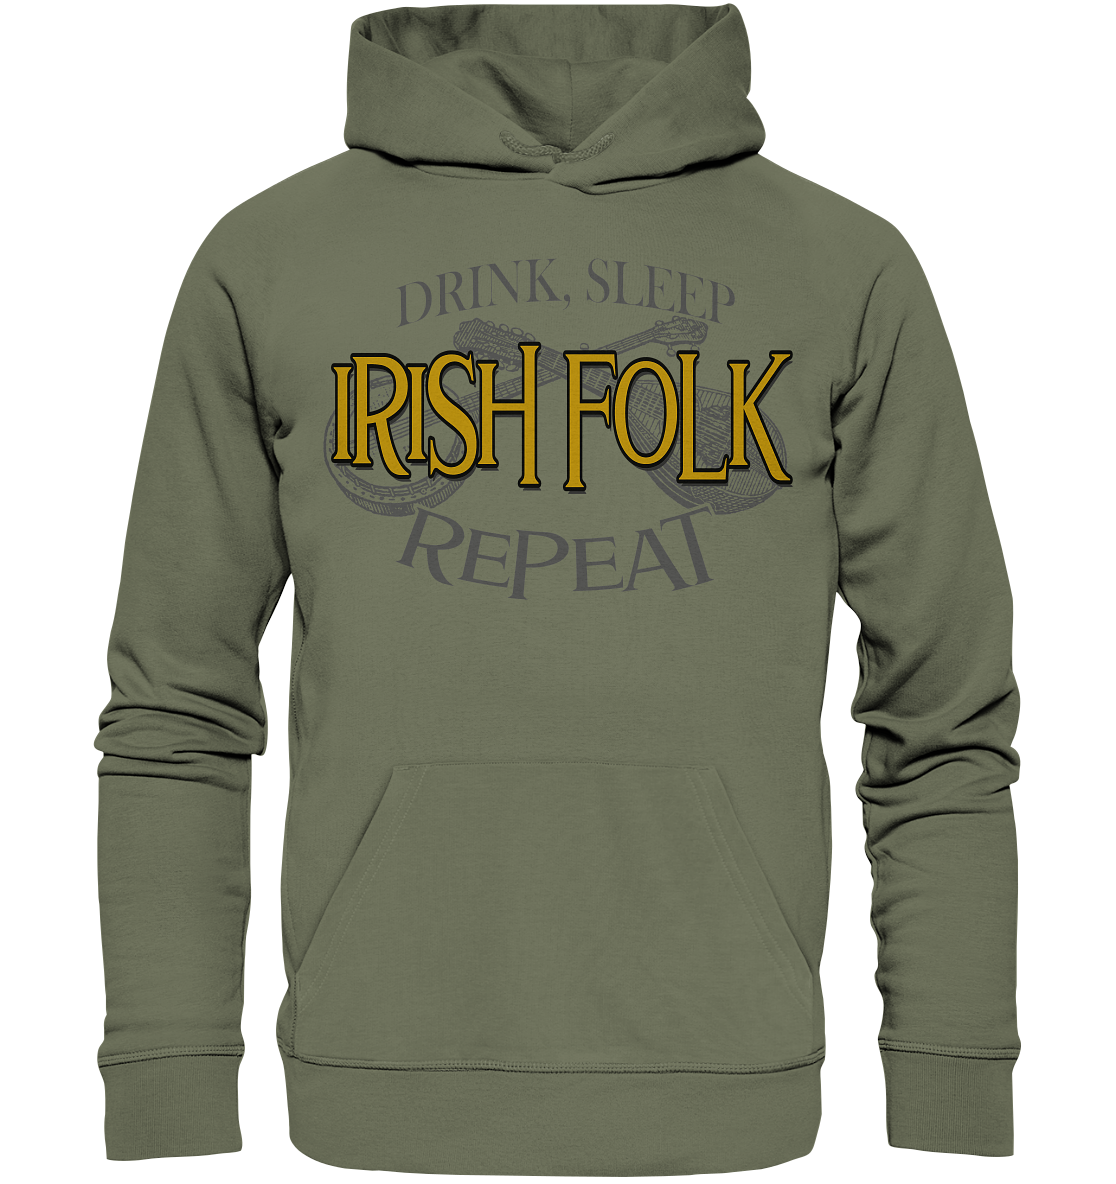 Drink, Sleep "Irish Folk" Repeat - Premium Unisex Hoodie